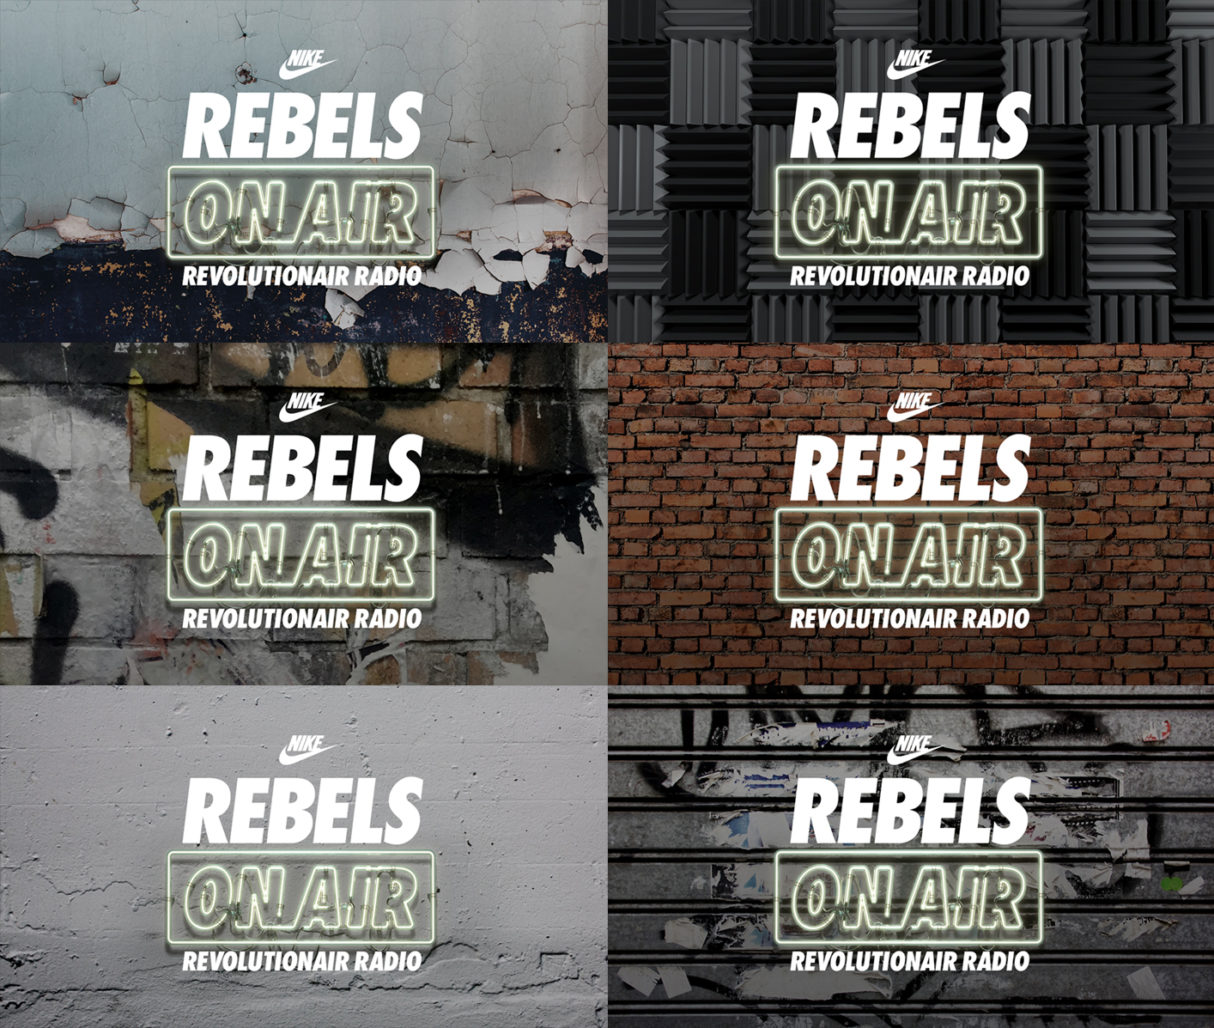 NIKE Rebels On Air Revolutionair Radio by Machineast Singapore design studio